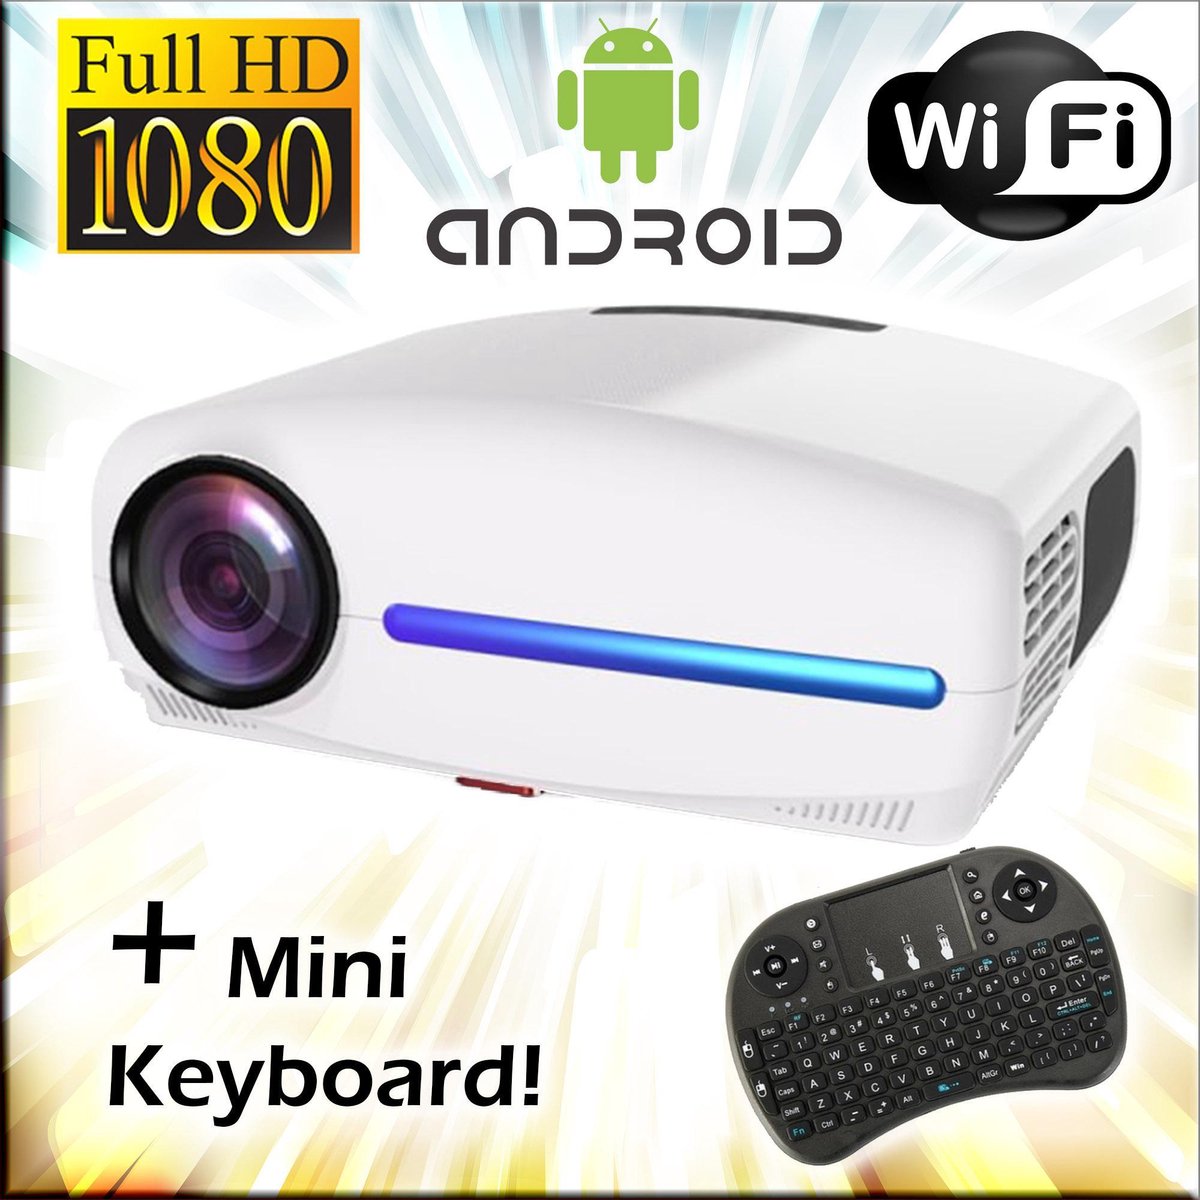 Full HD beamer / 1080p projector + Android 9 + Wifi +Digital Keystone + Phone mirroring + Bluetooth + 6800 lumen + mini keyboard! - Home theatre